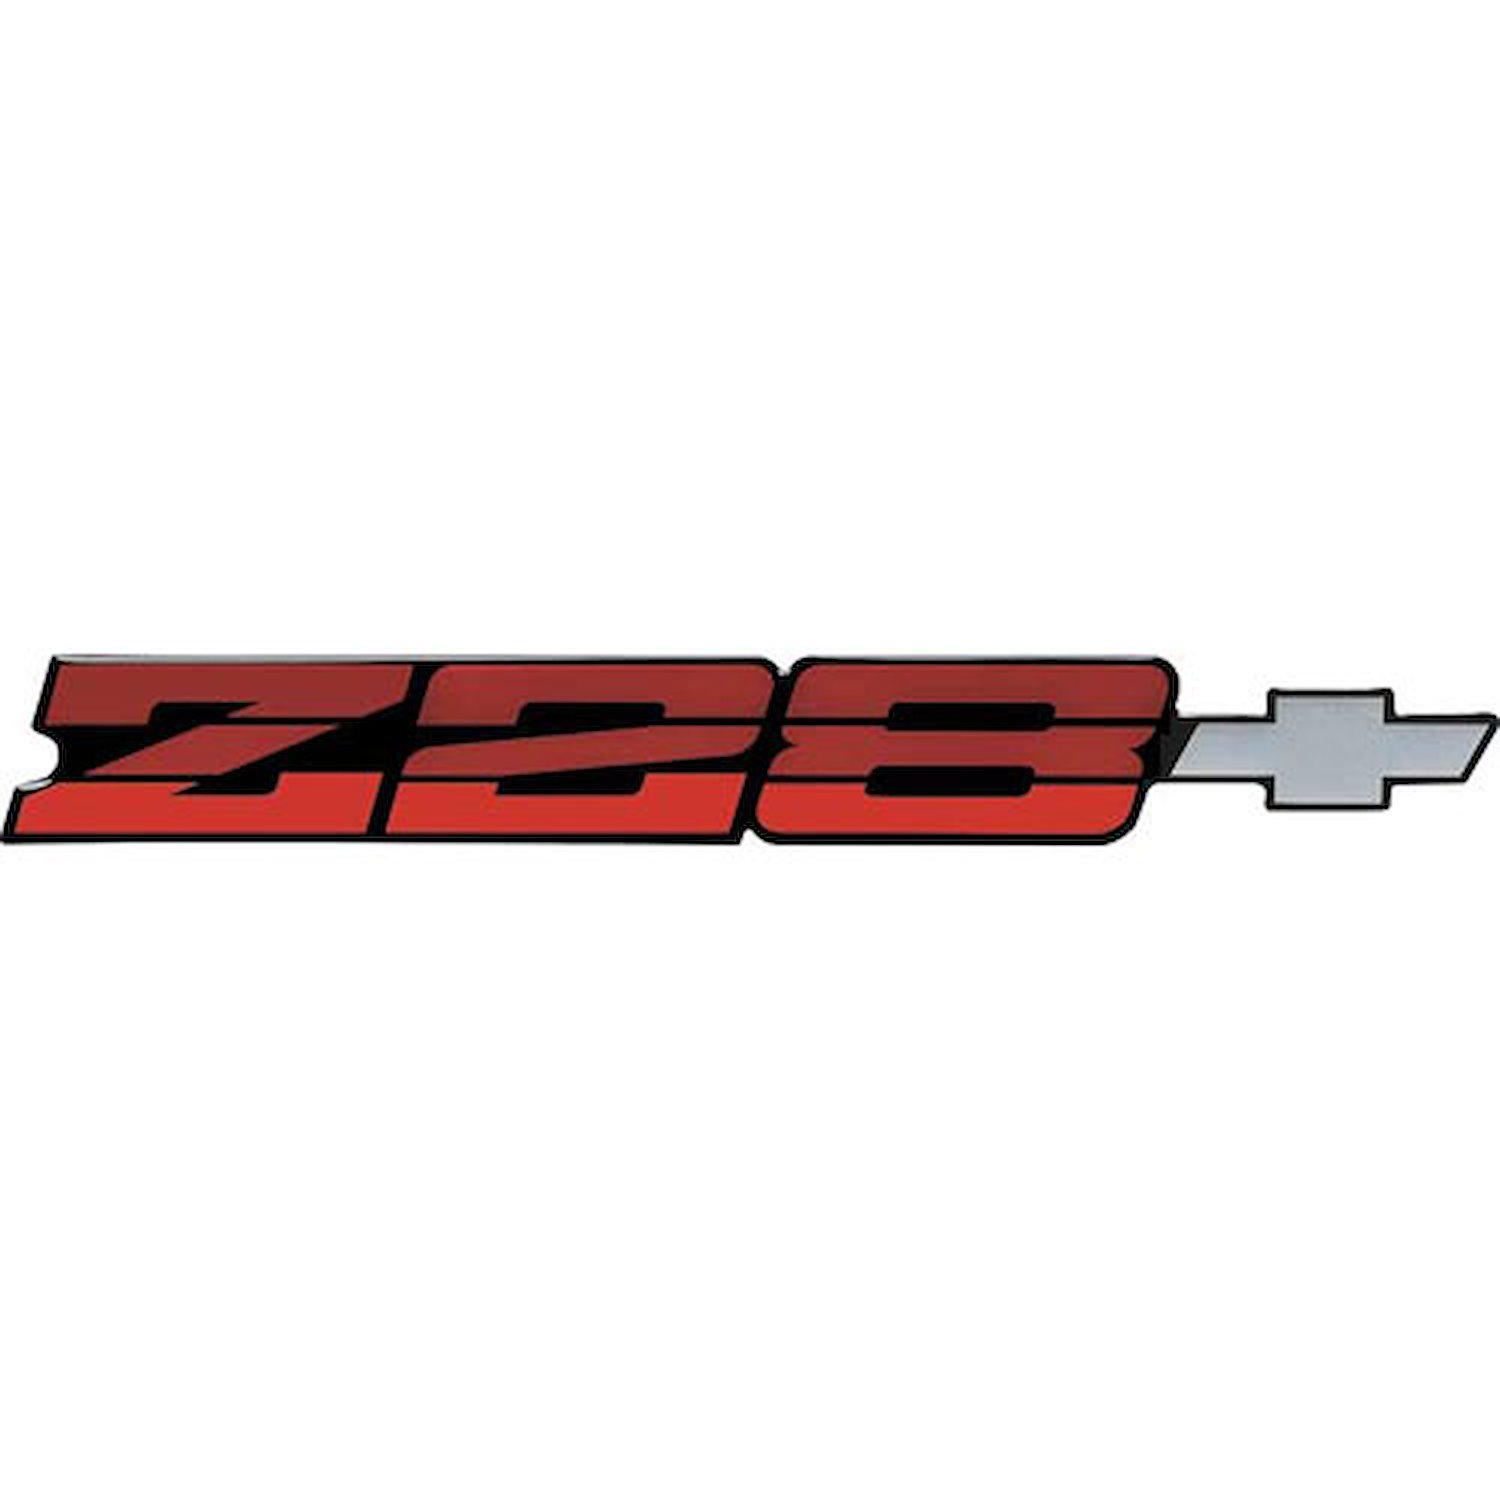 14065284 Rear Panel Emblem 1982-84 Camaro Z28; Red